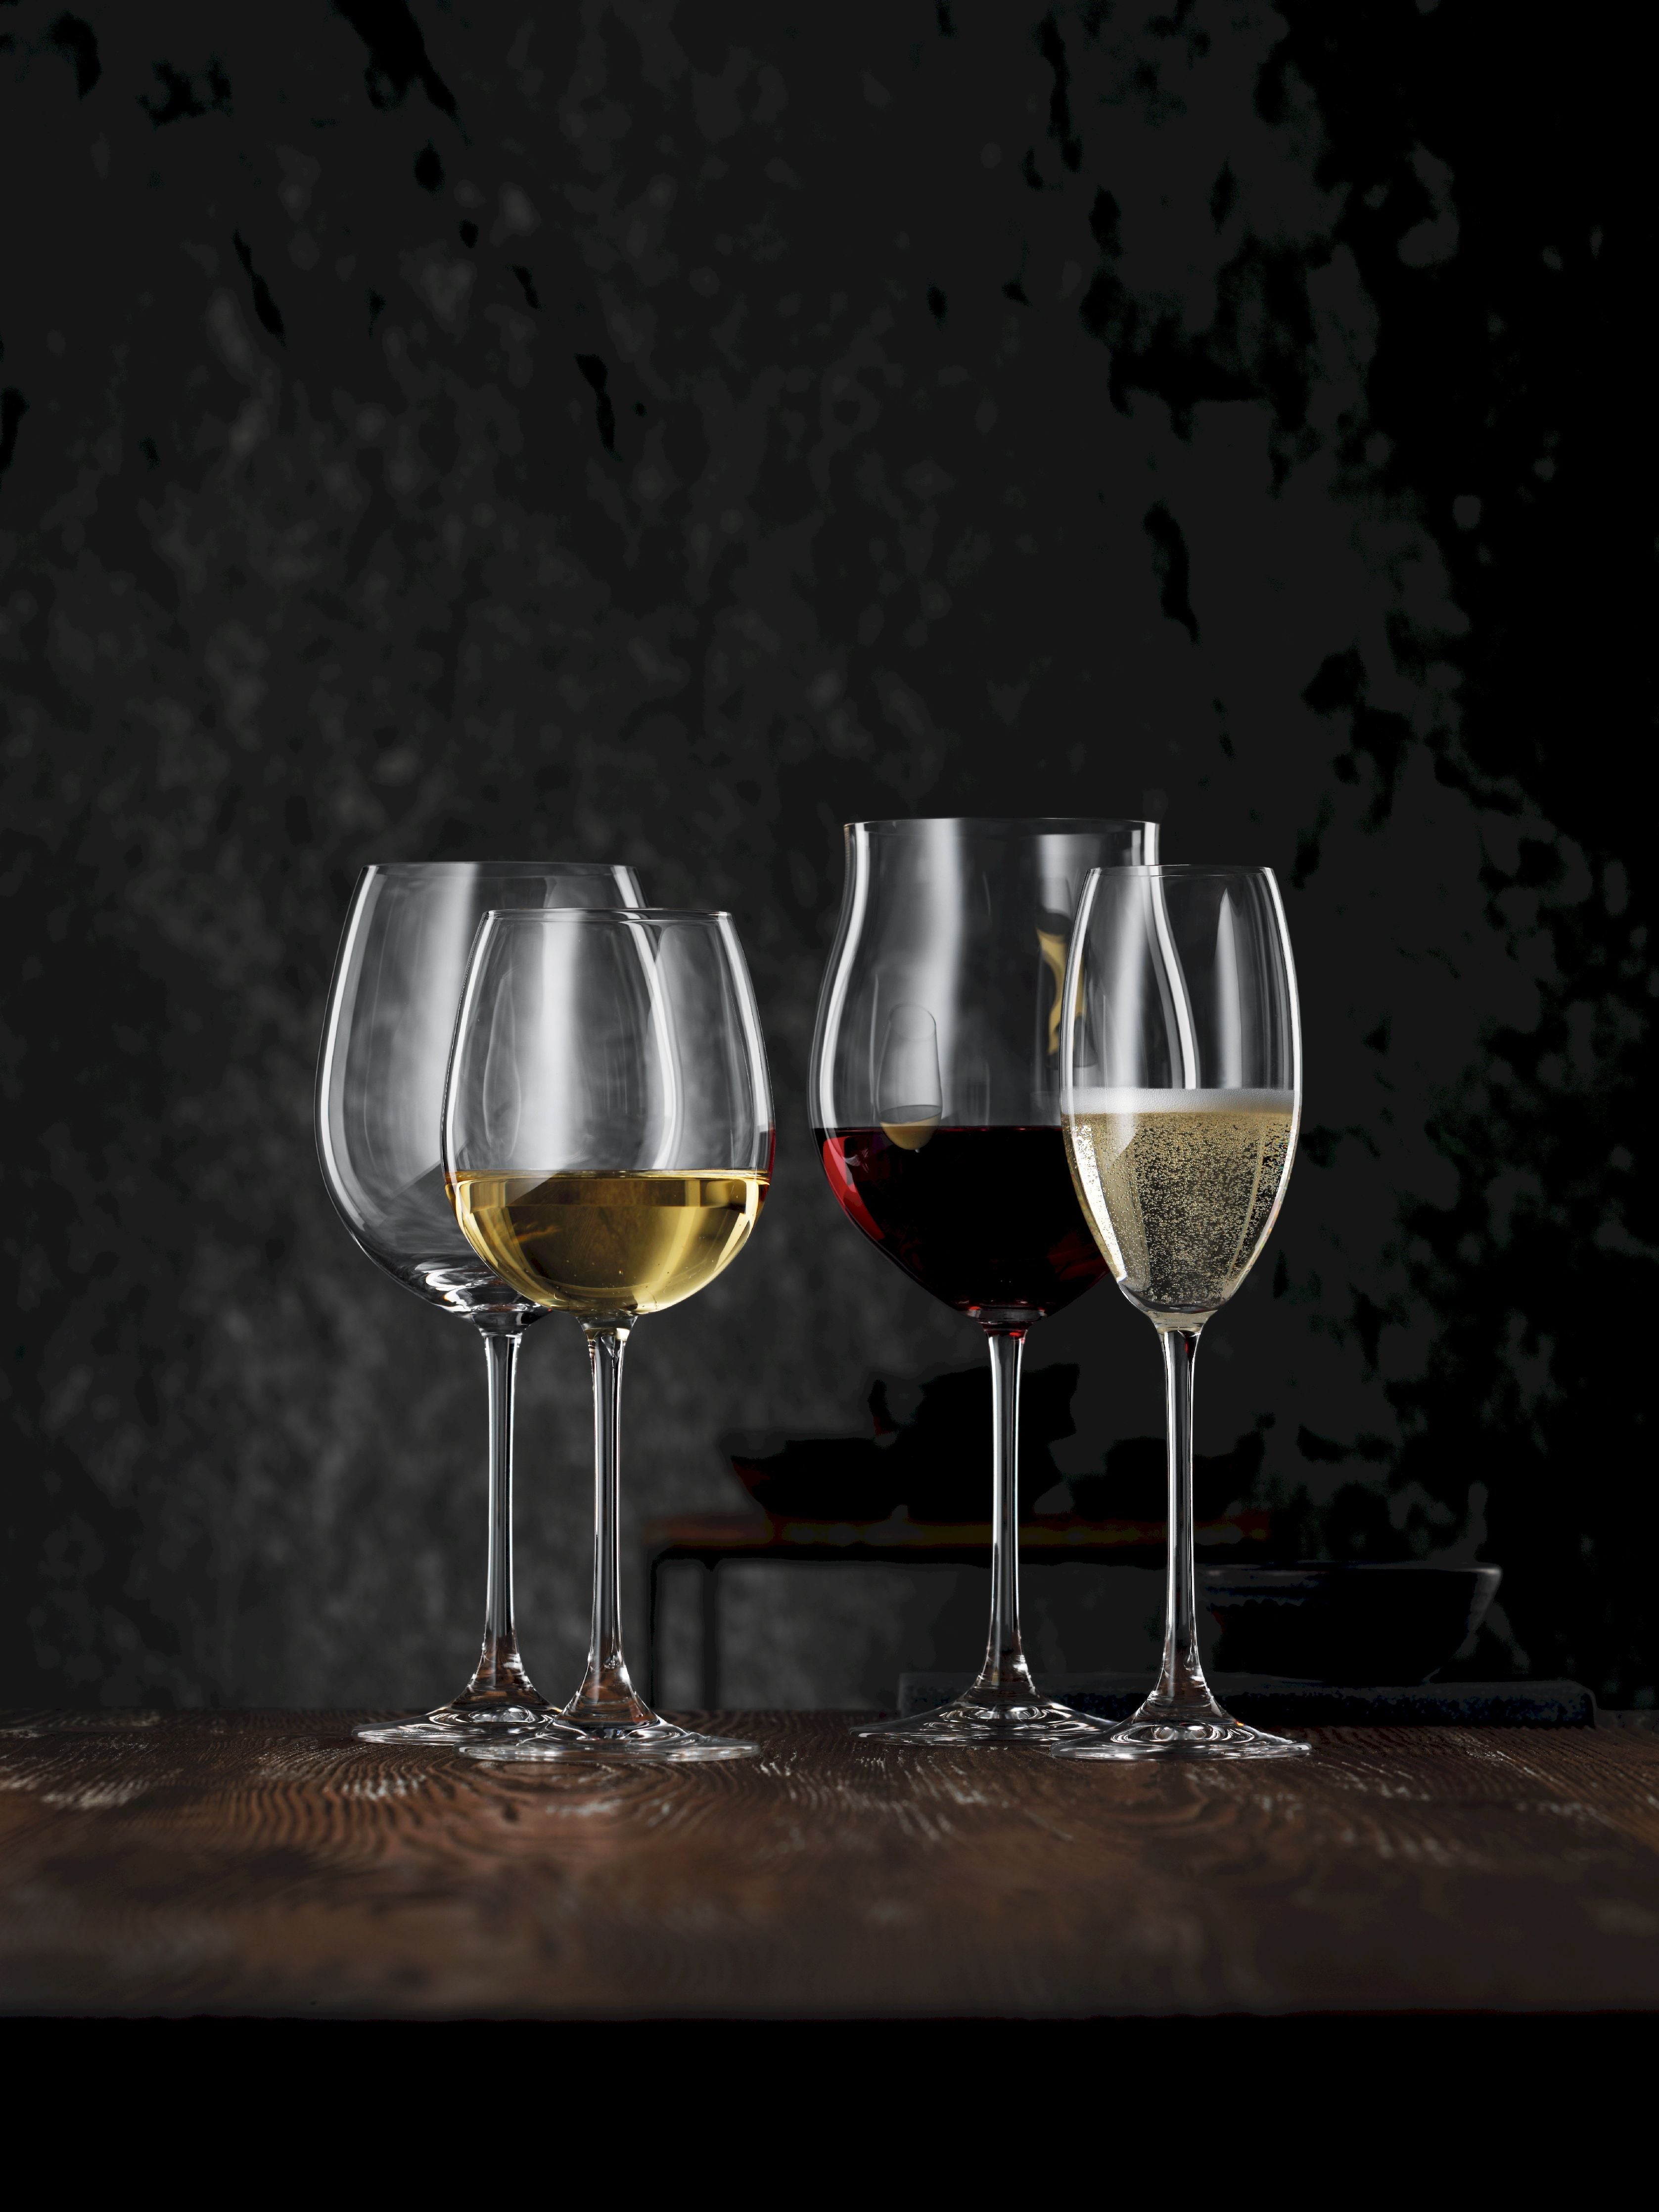 Nachtmann Vivendi Premium Pinot Noir Wine Glass 897 Ml, Set Of 4